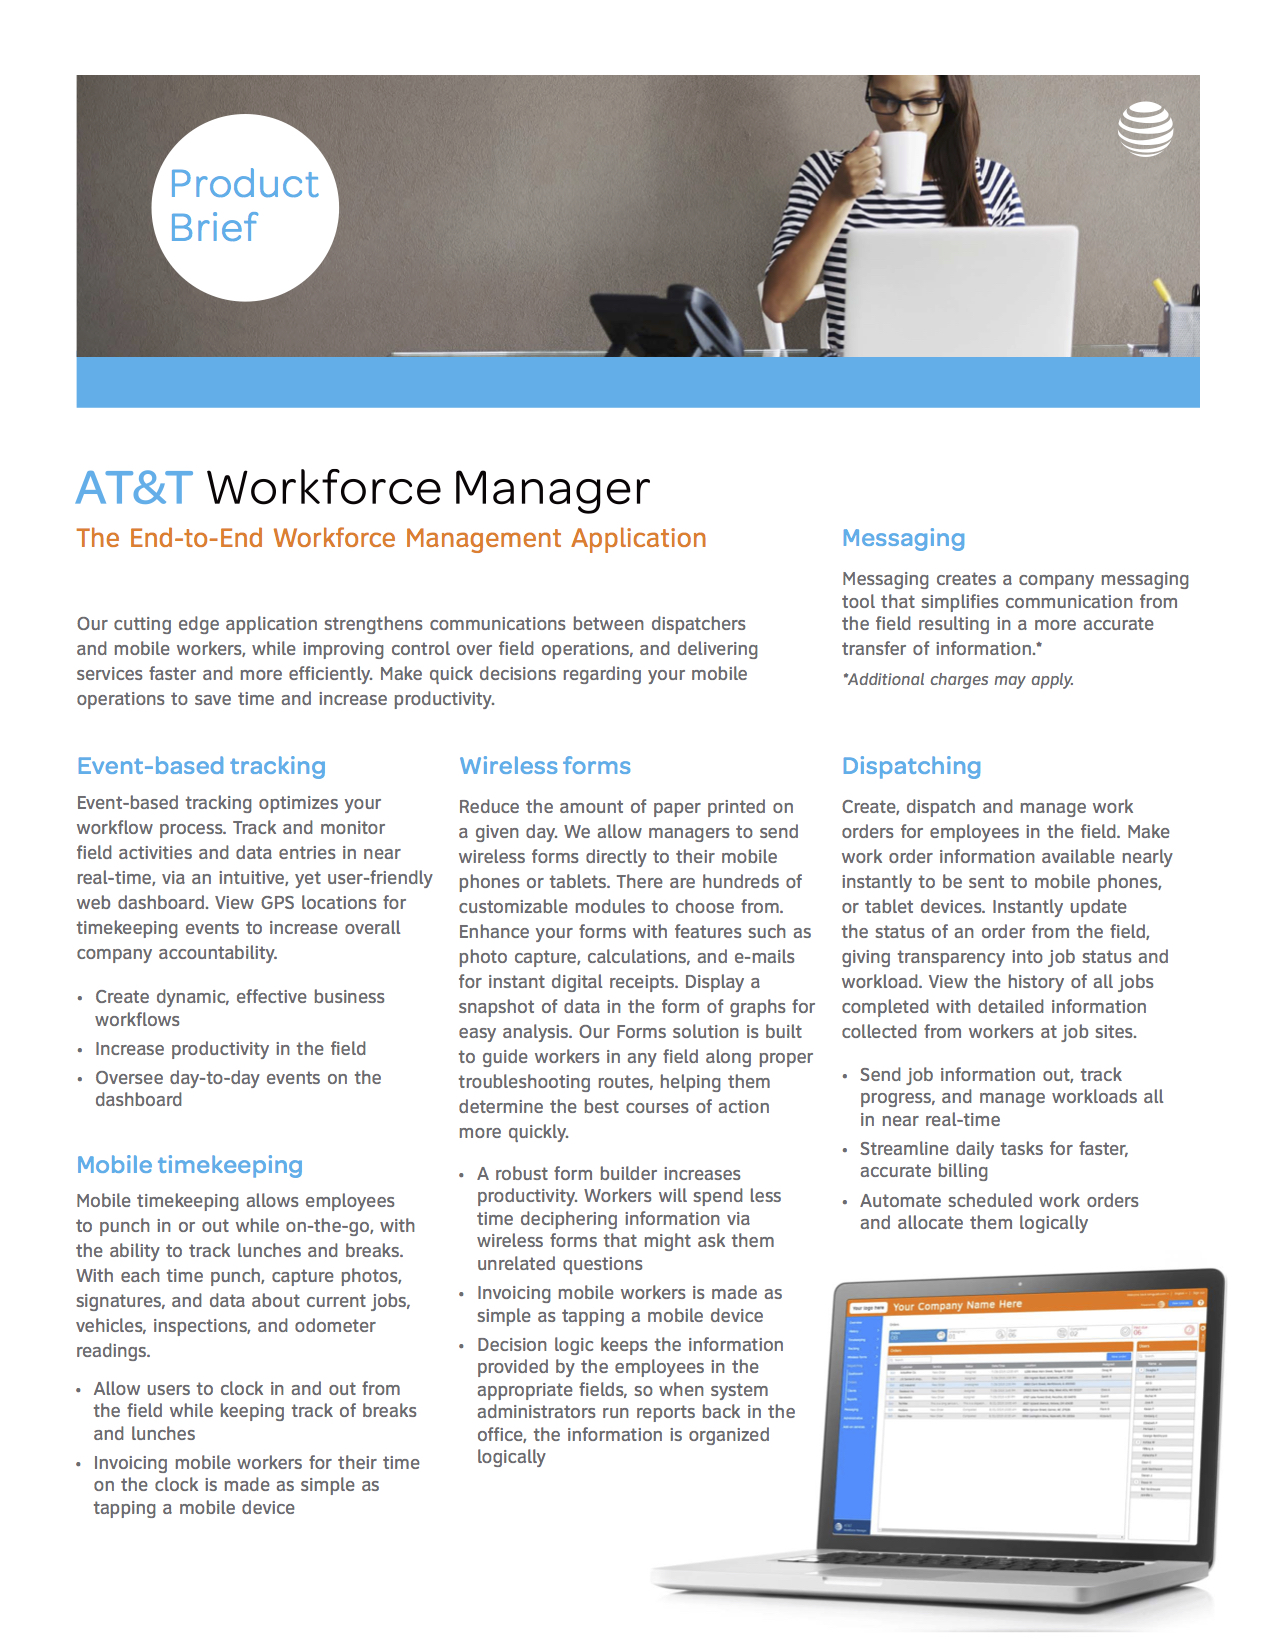 att-workforce-manager-p1.jpg